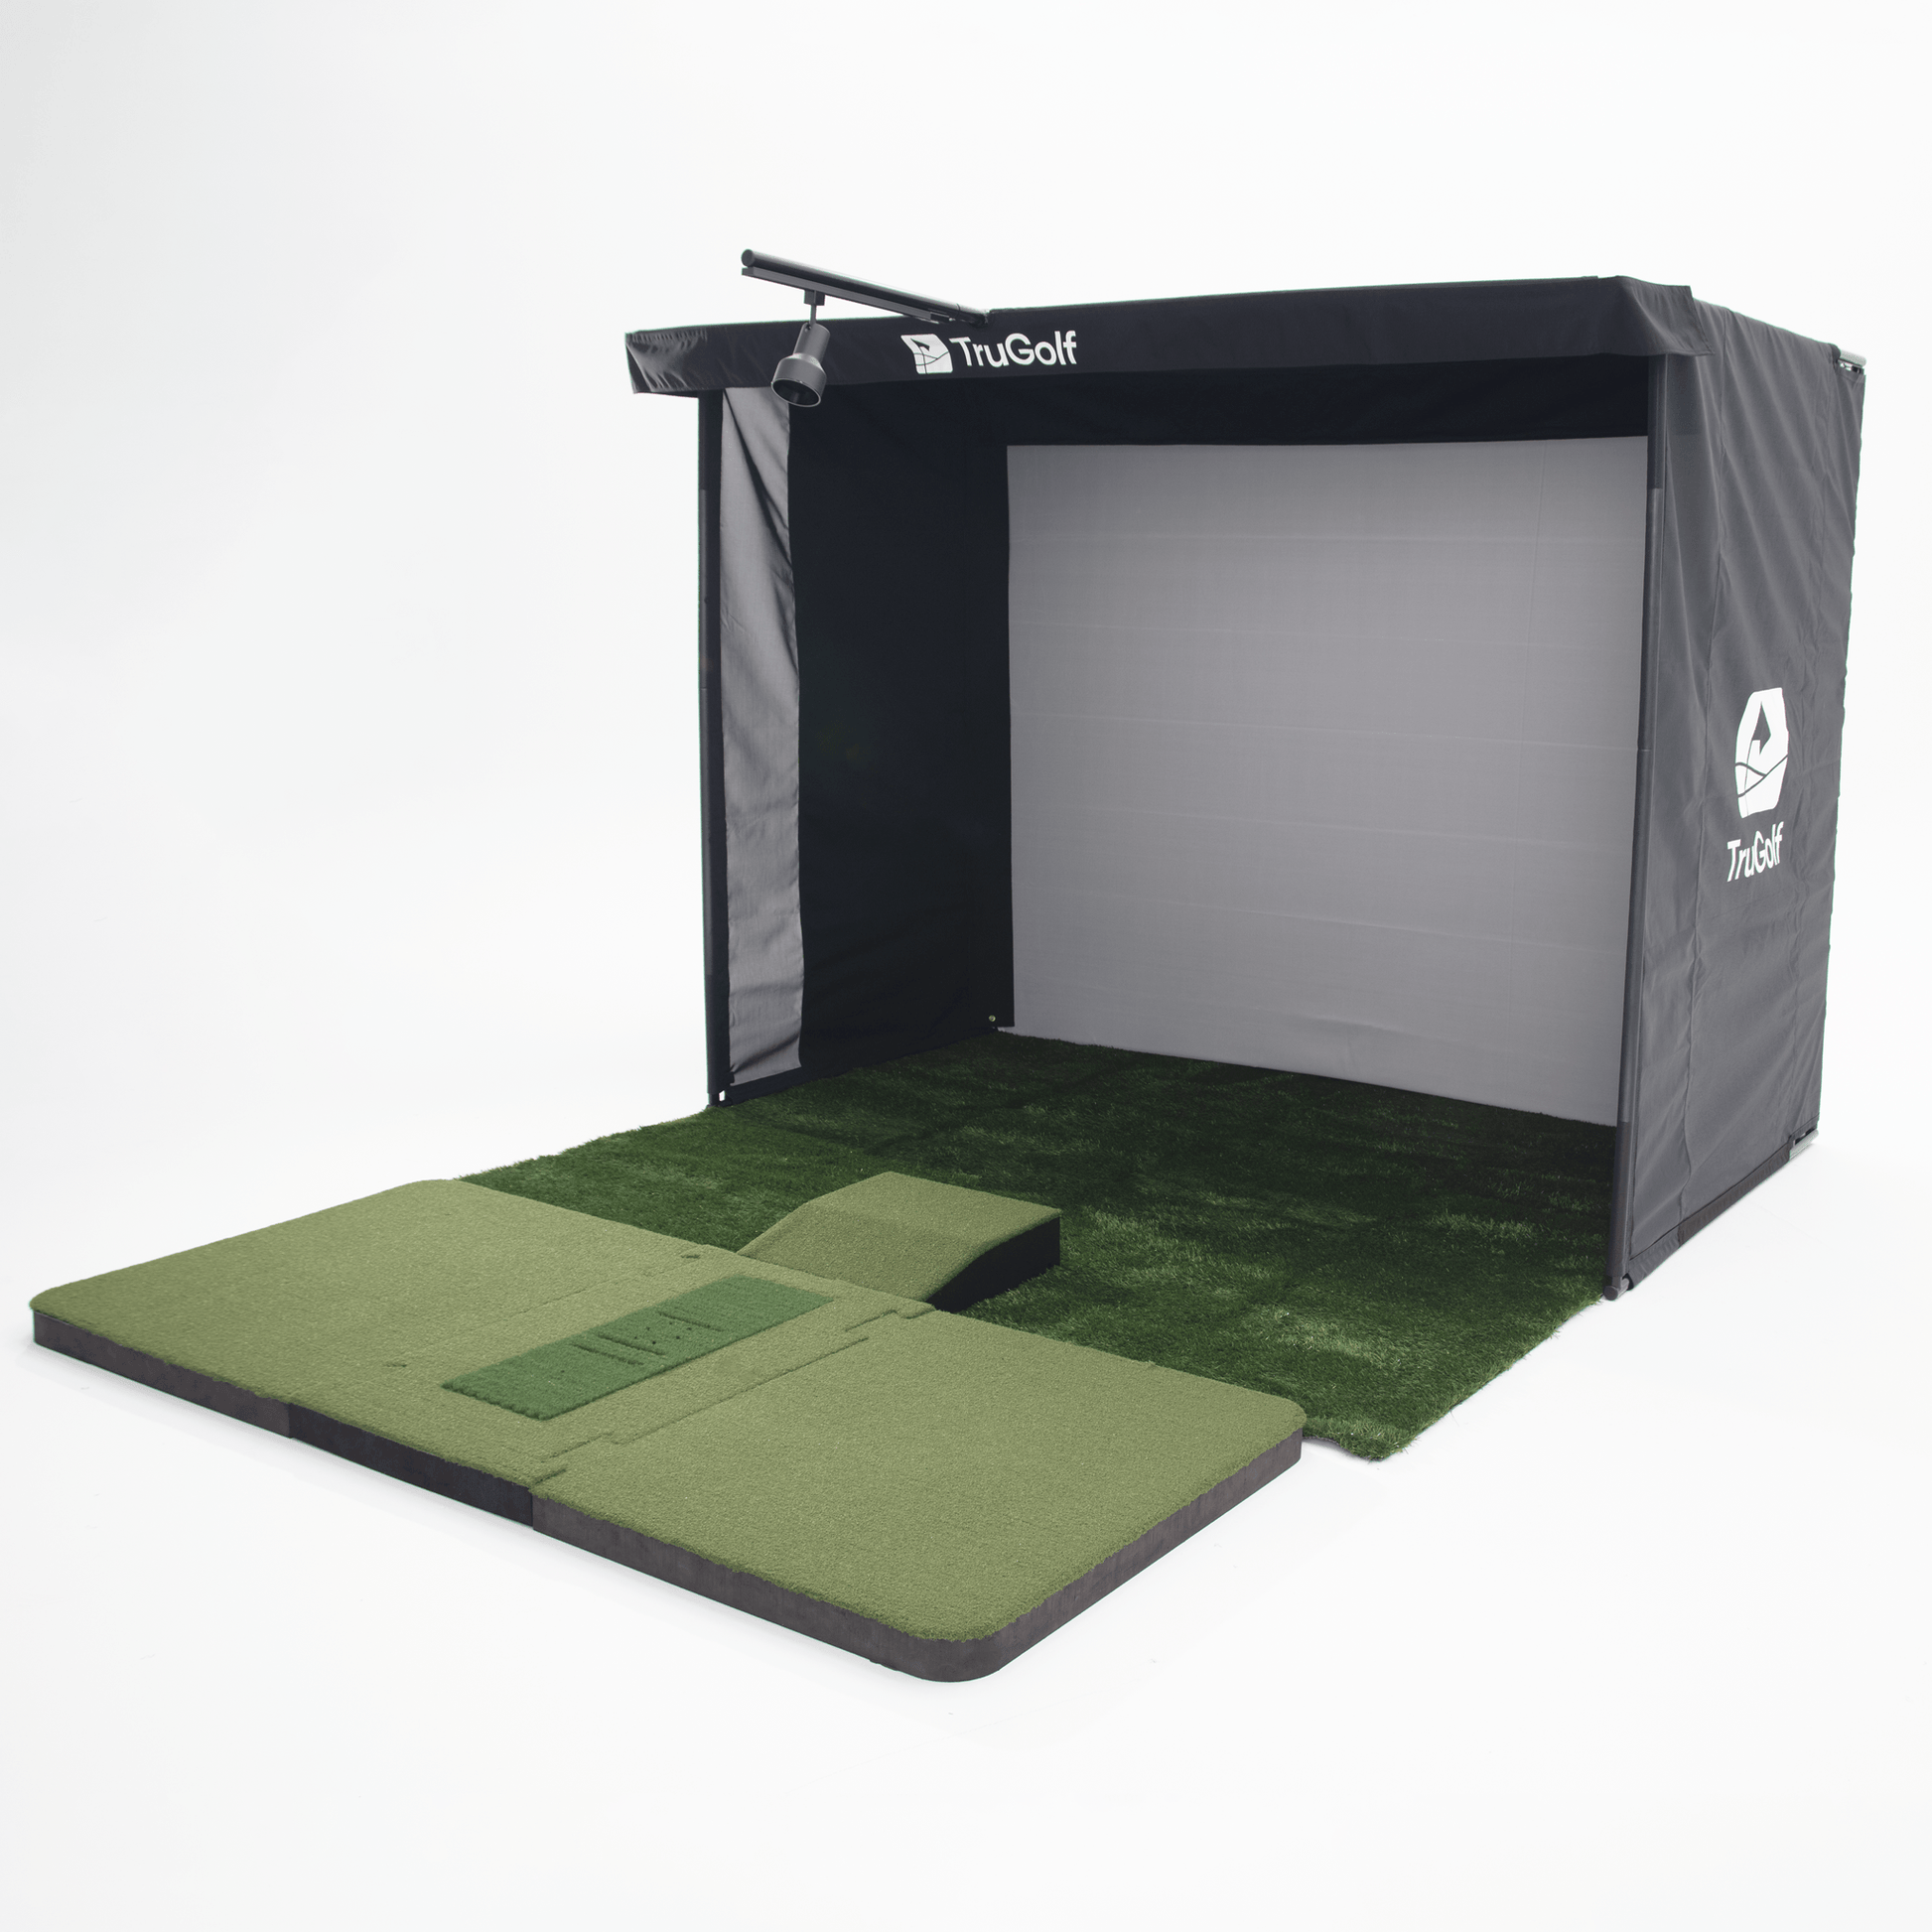 Home Golf Simulator by TruGolf